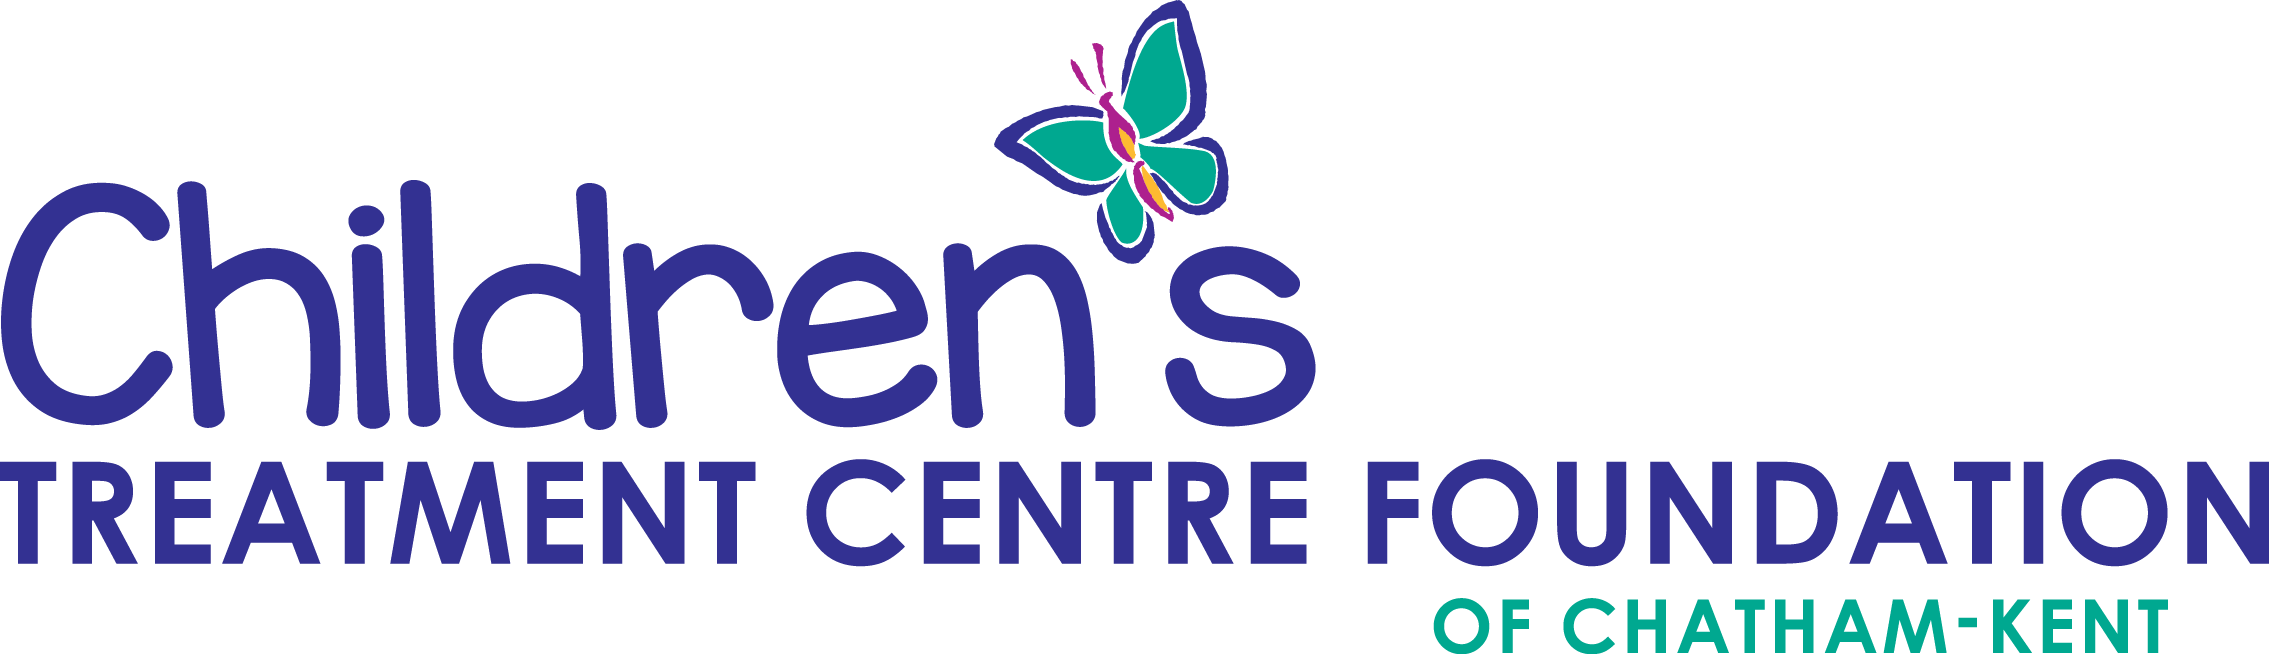 Children's Treatment Centre Foundation